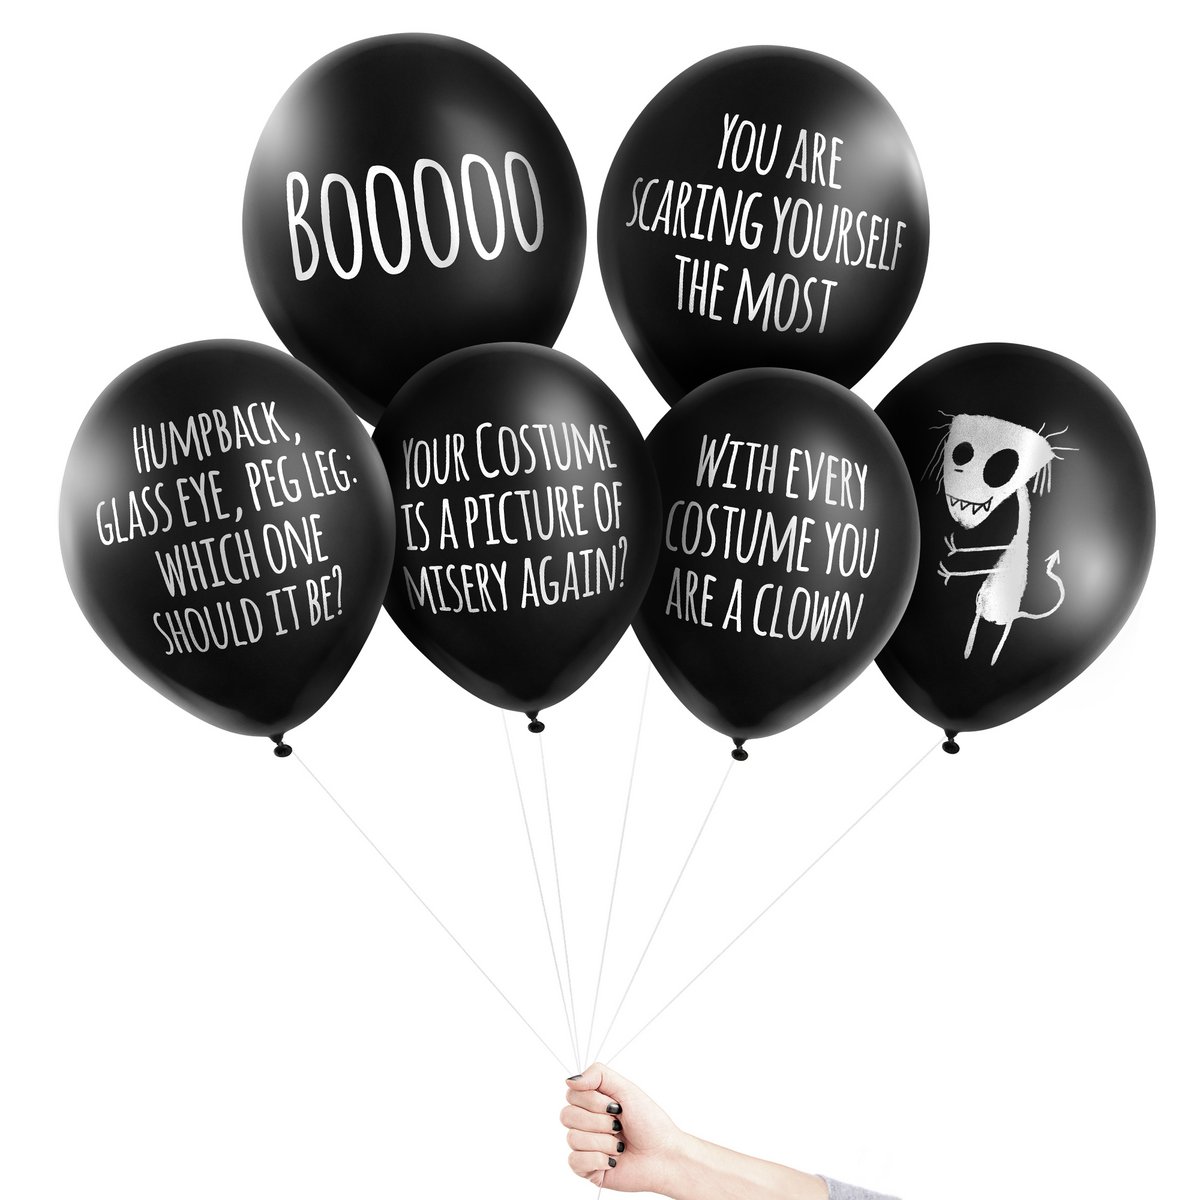 Anti-Balloons - BOOOO